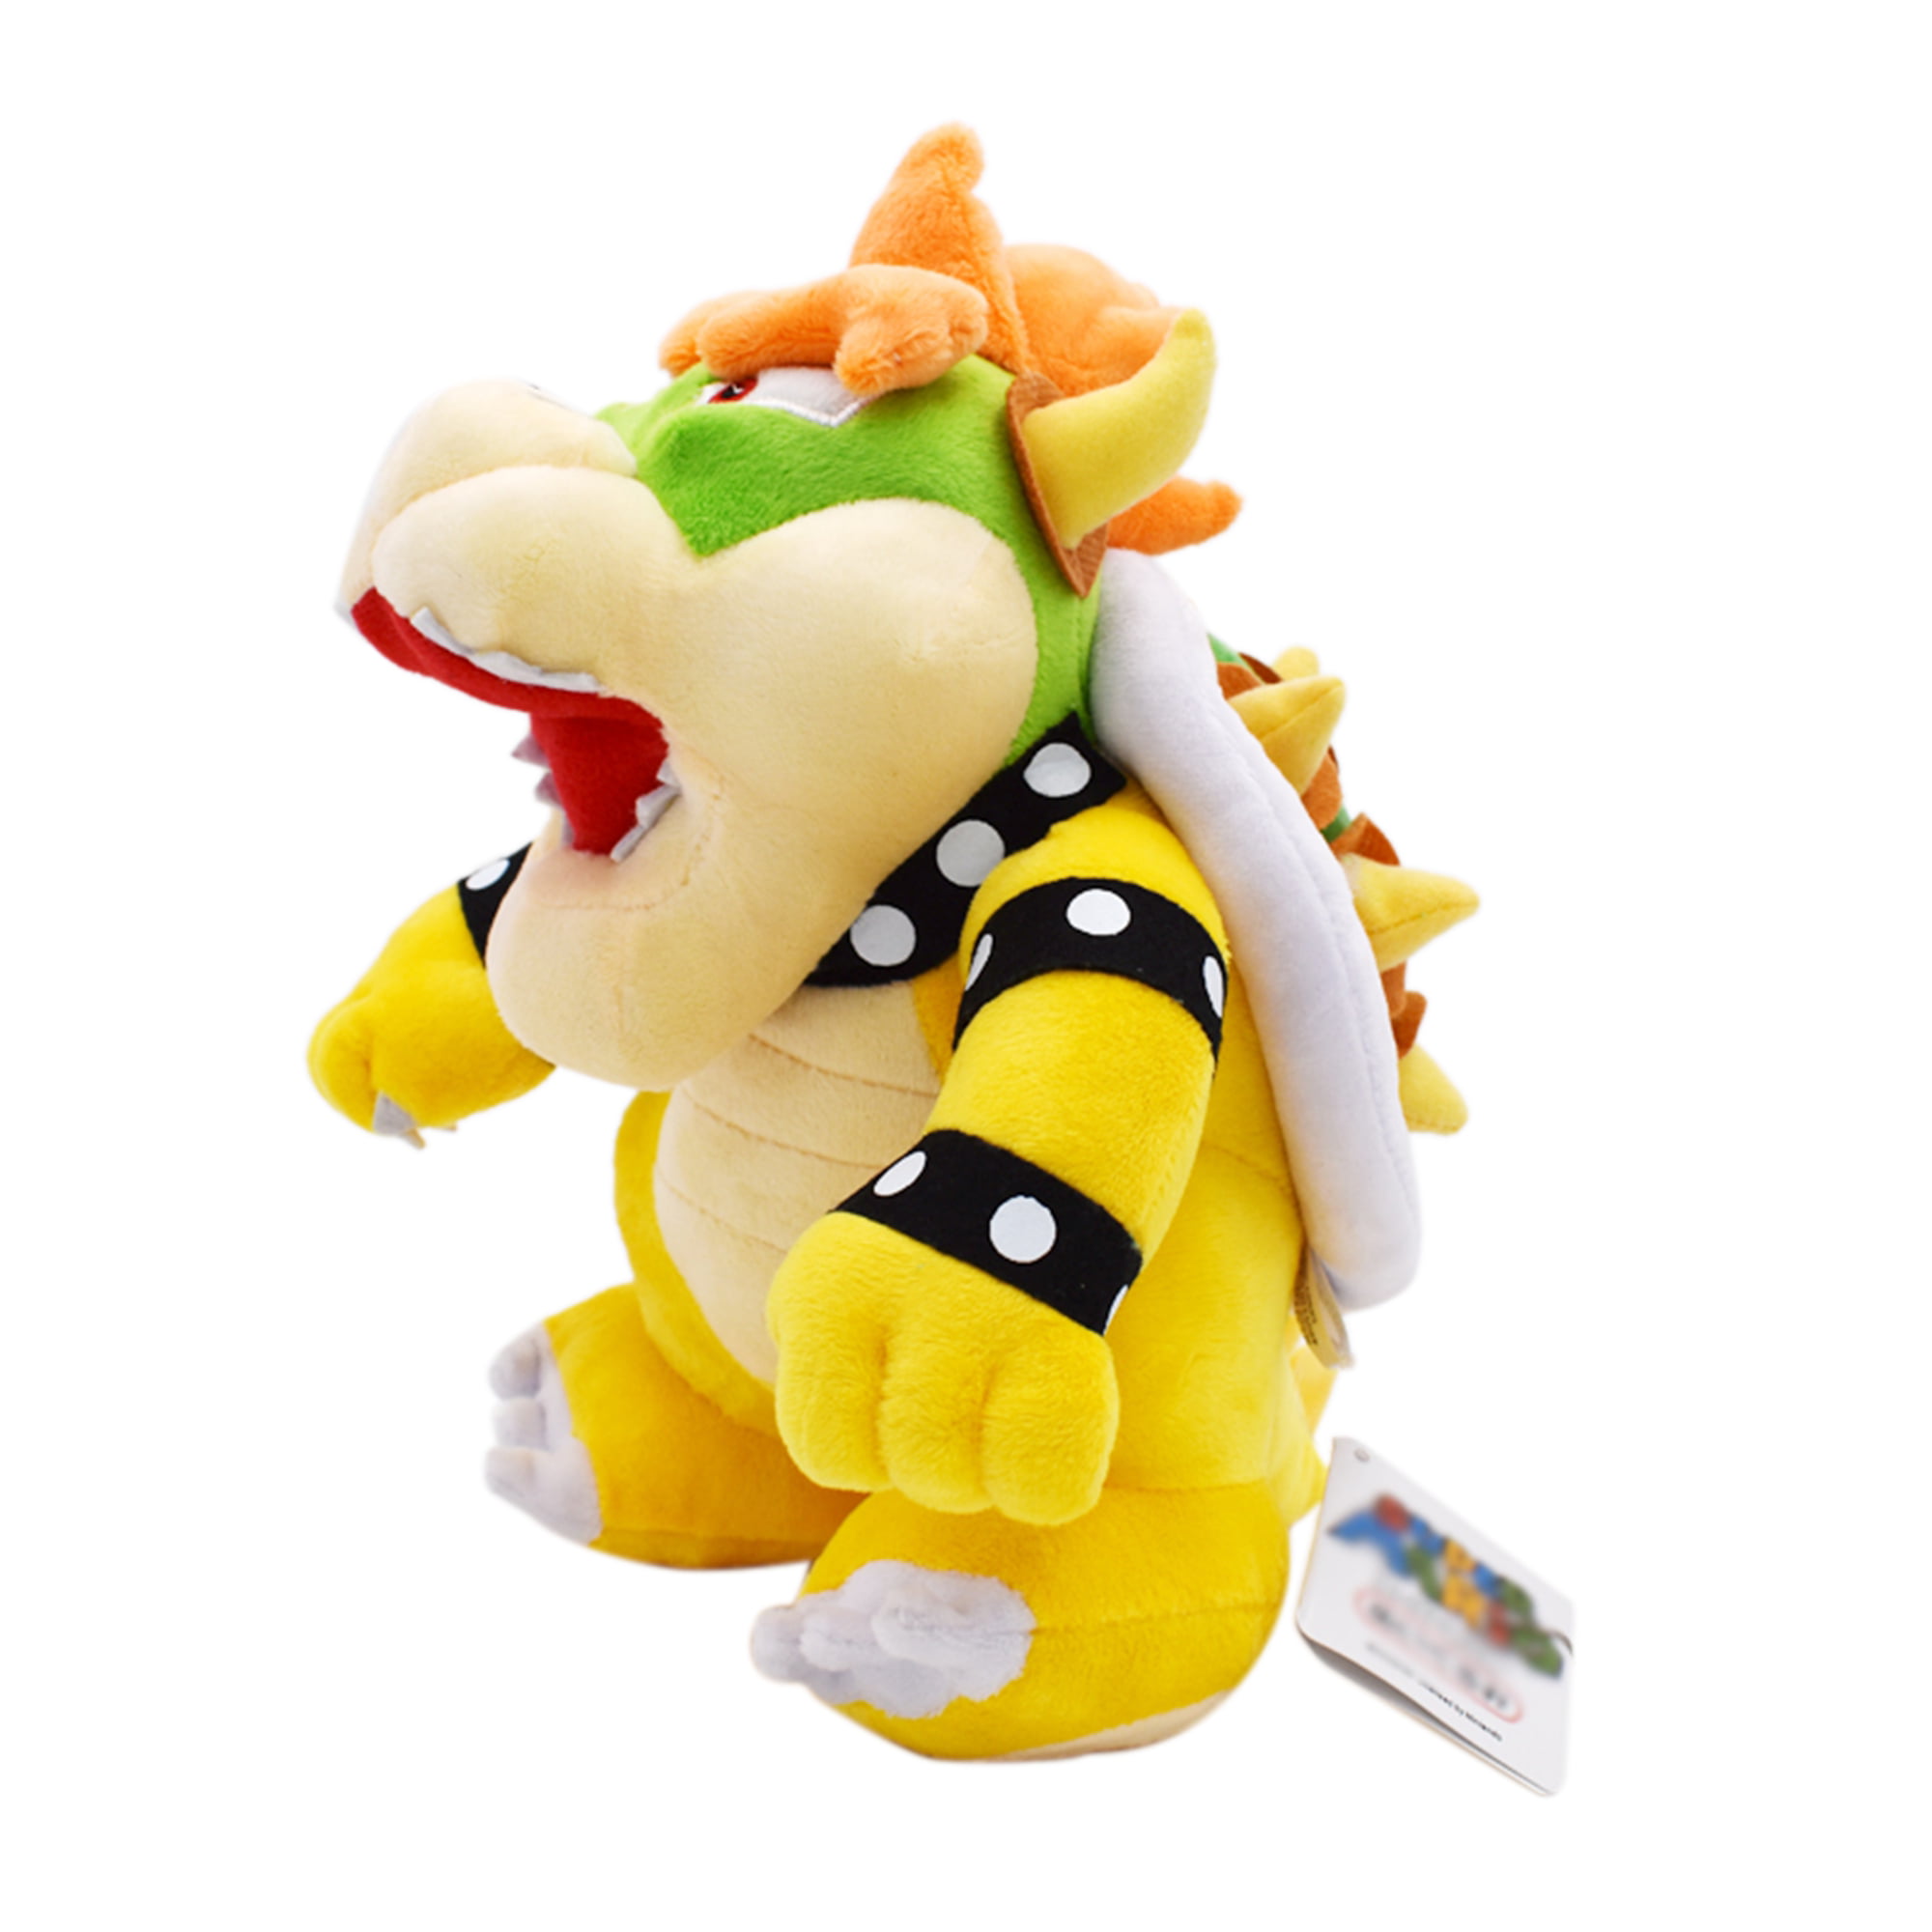 Plush - Nintendo - Super Mario - Bowser 10 Soft Doll New Toys Gifts 1423 